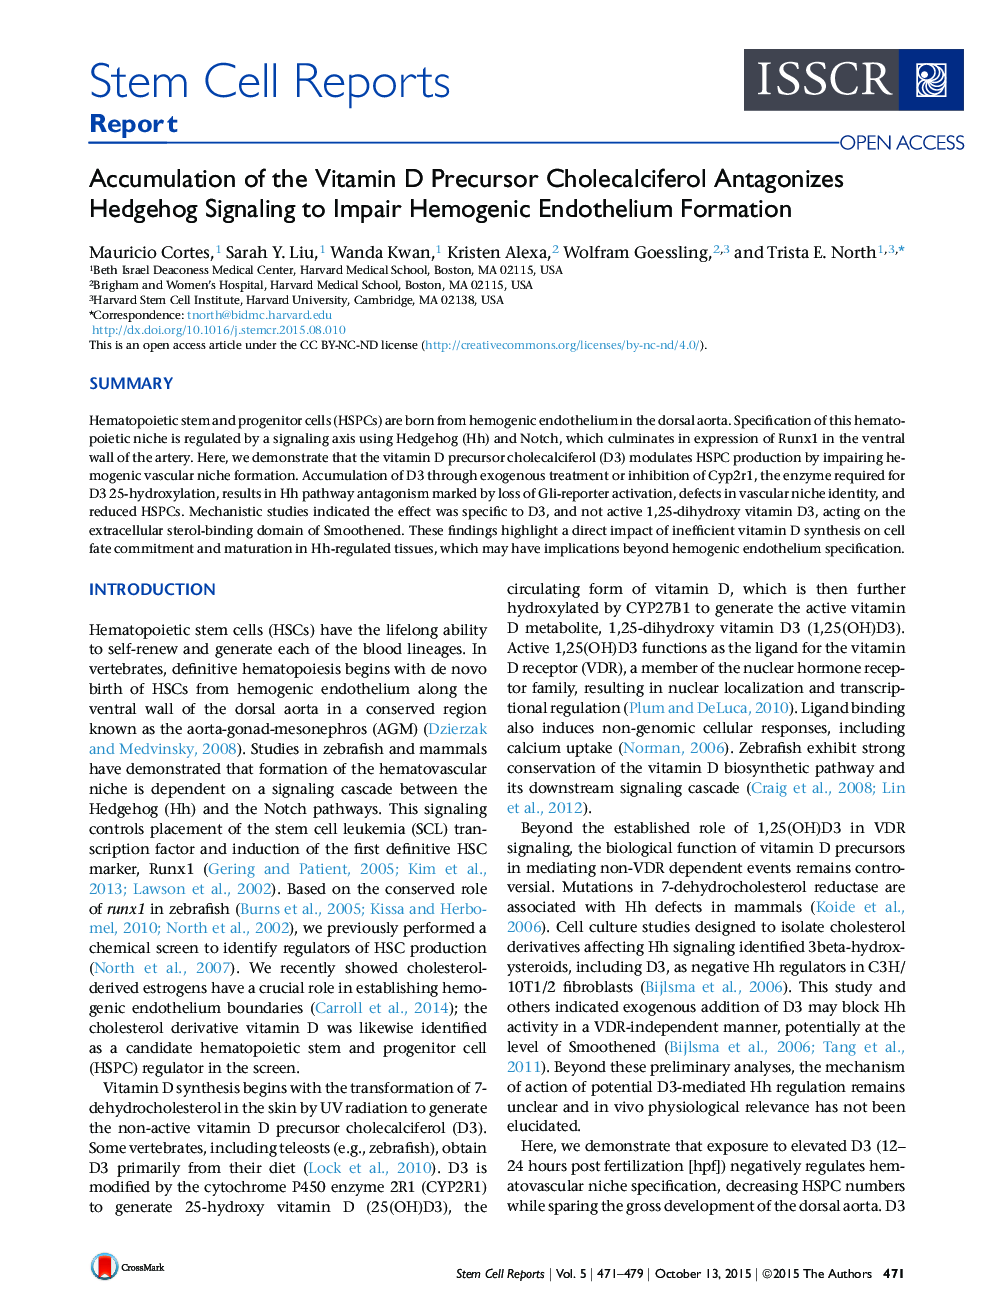 Accumulation of the Vitamin D Precursor Cholecalciferol Antagonizes Hedgehog Signaling to Impair Hemogenic Endothelium Formation 